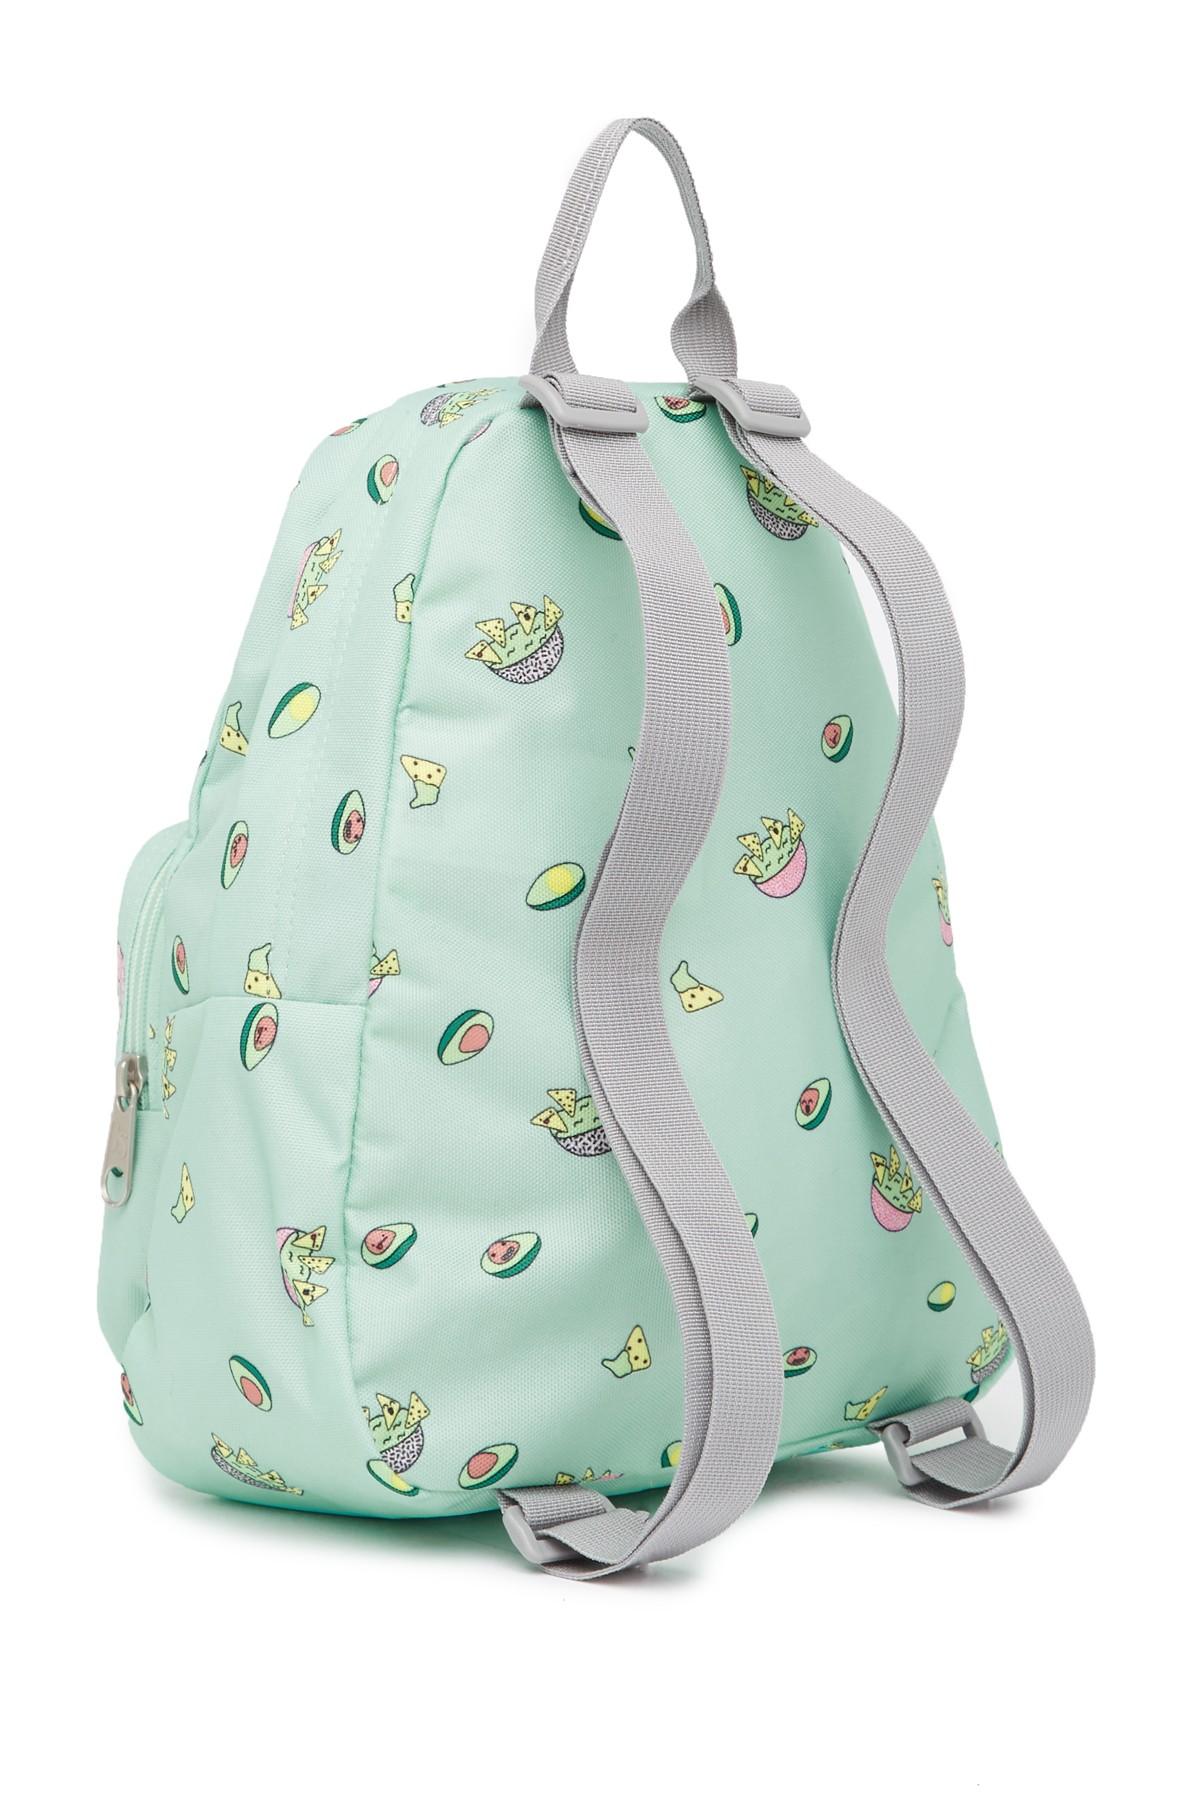 avocado backpack jansport